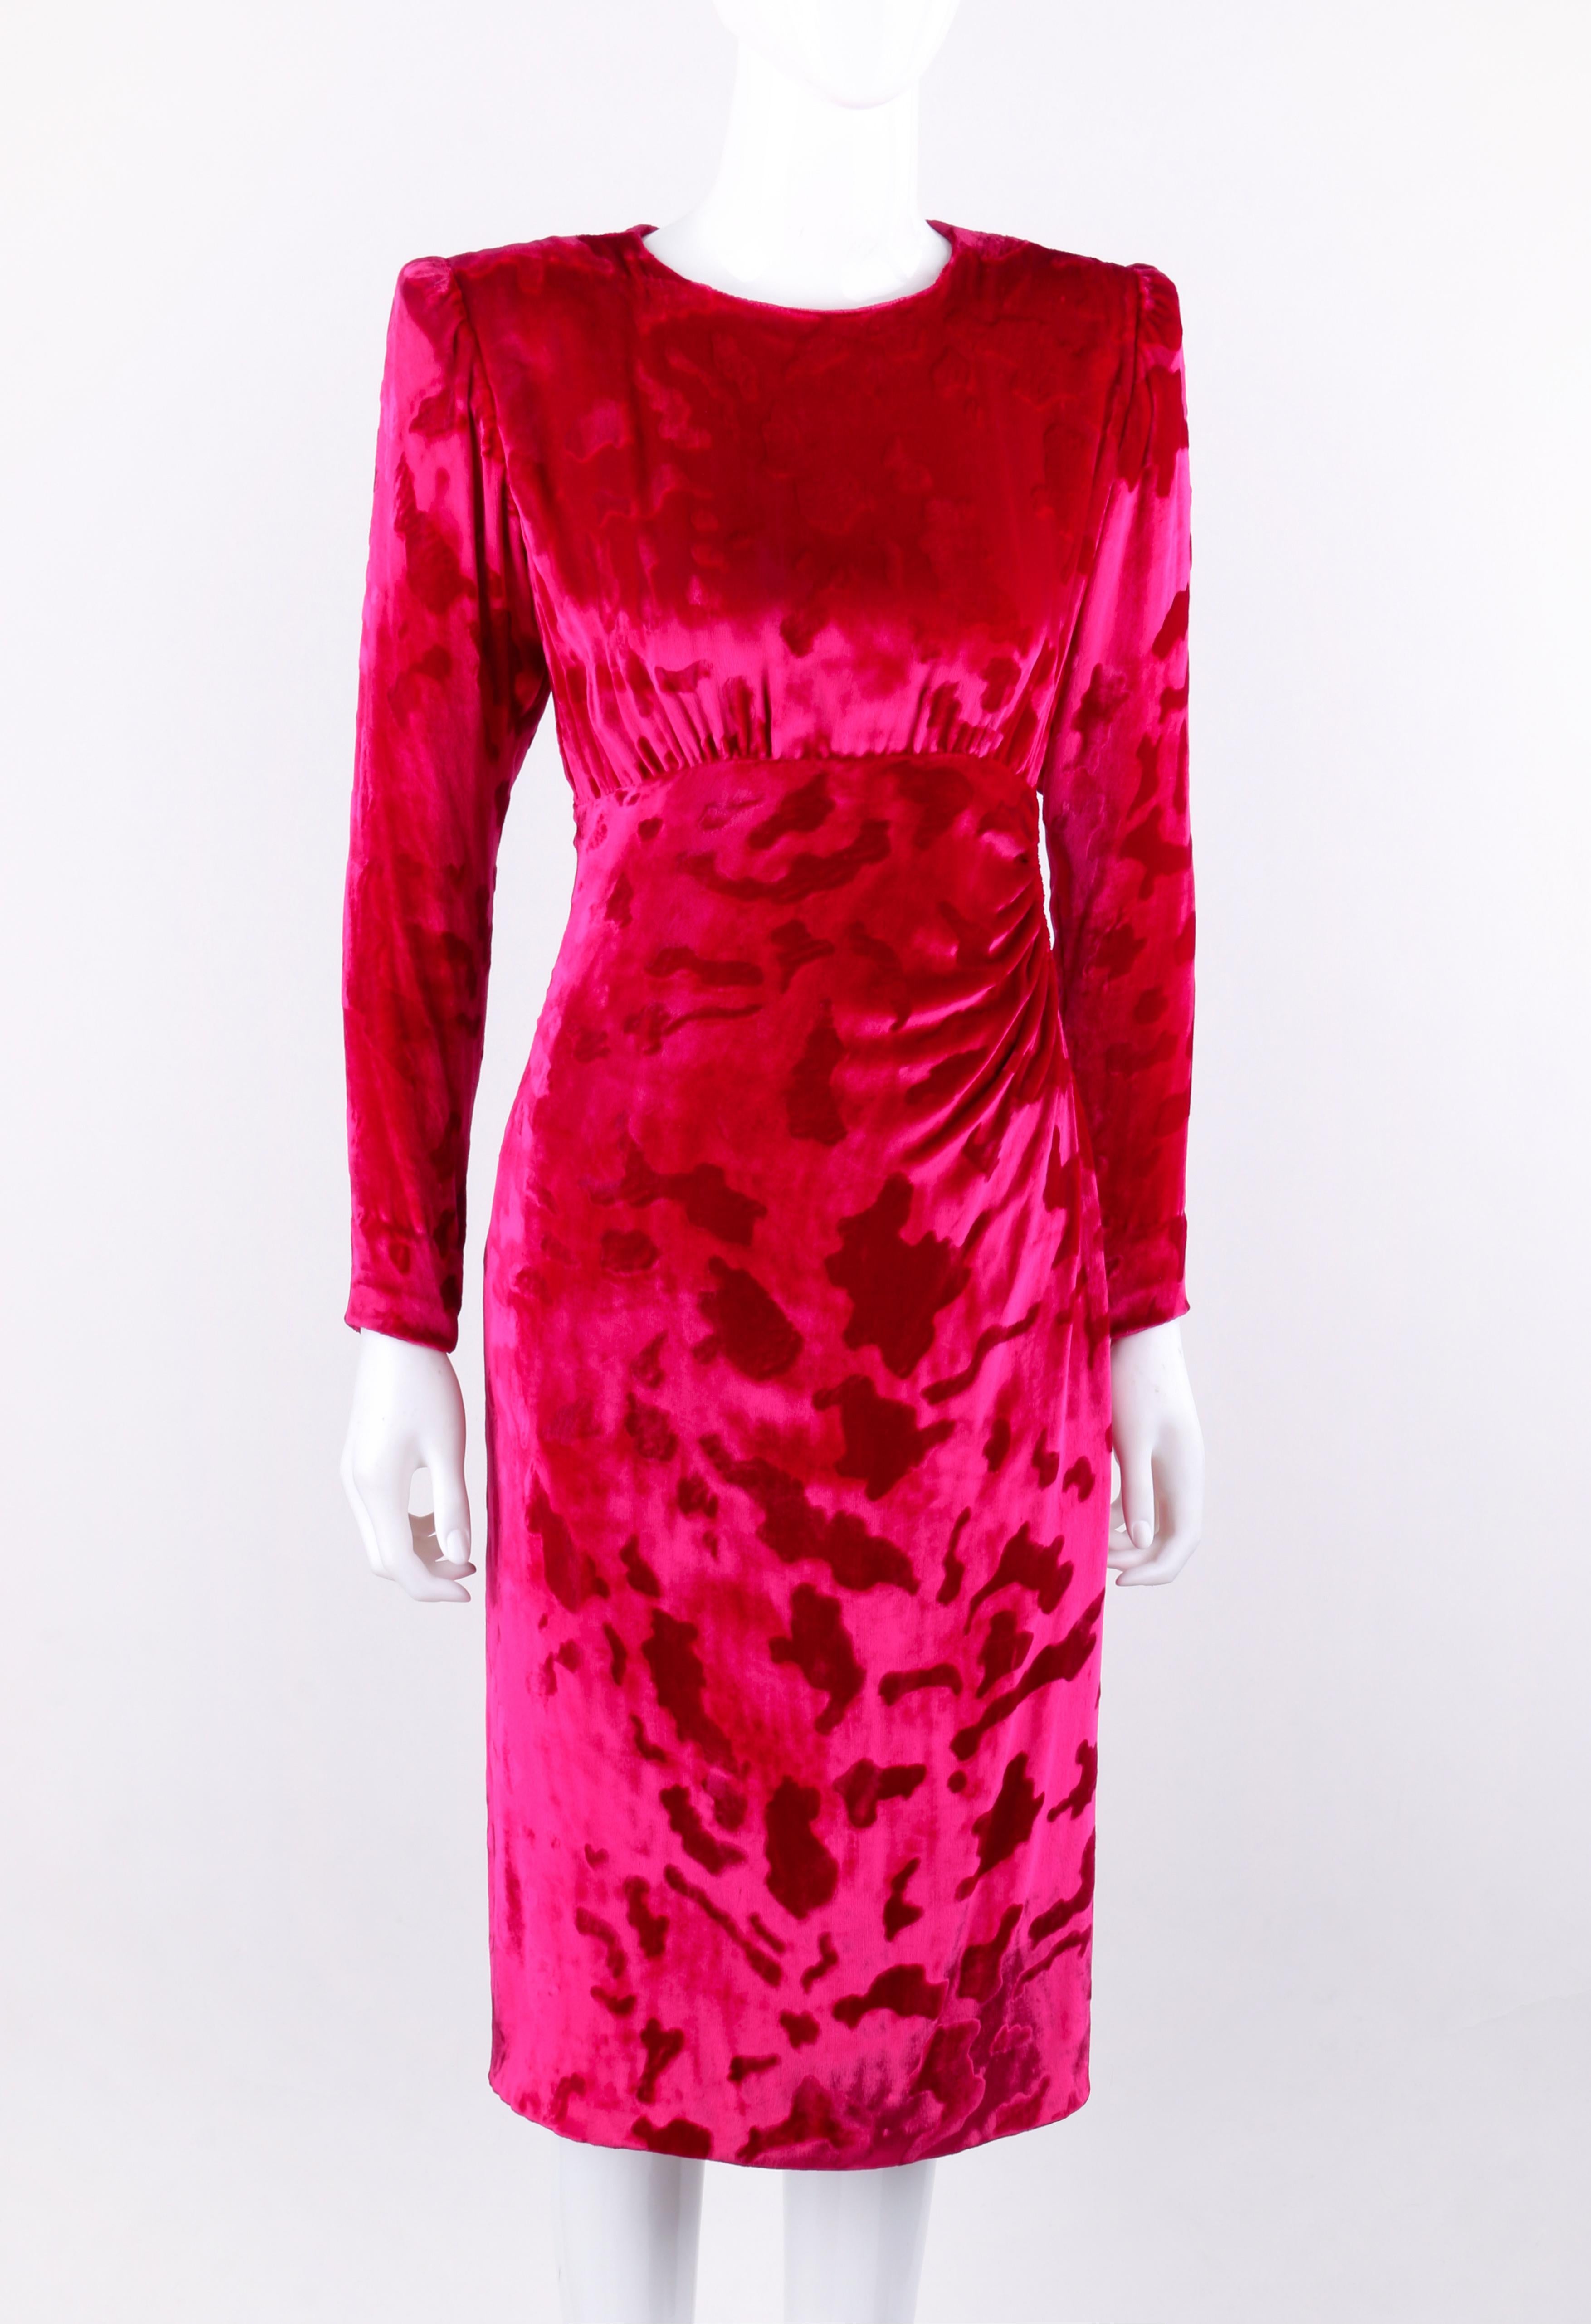 DESCRIPTION: GIVENCHY c.1990's Haute Couture Fuchsia Pink Leopard Print Velvet Evening Dress
 
Circa: c.1990’s
Label(s): Givenchy; 72310 (Haute Couture number)
Designer: Hubert de Givenchy 
Style: Evening dress
Color(s): Fuchsia pink
Lined: